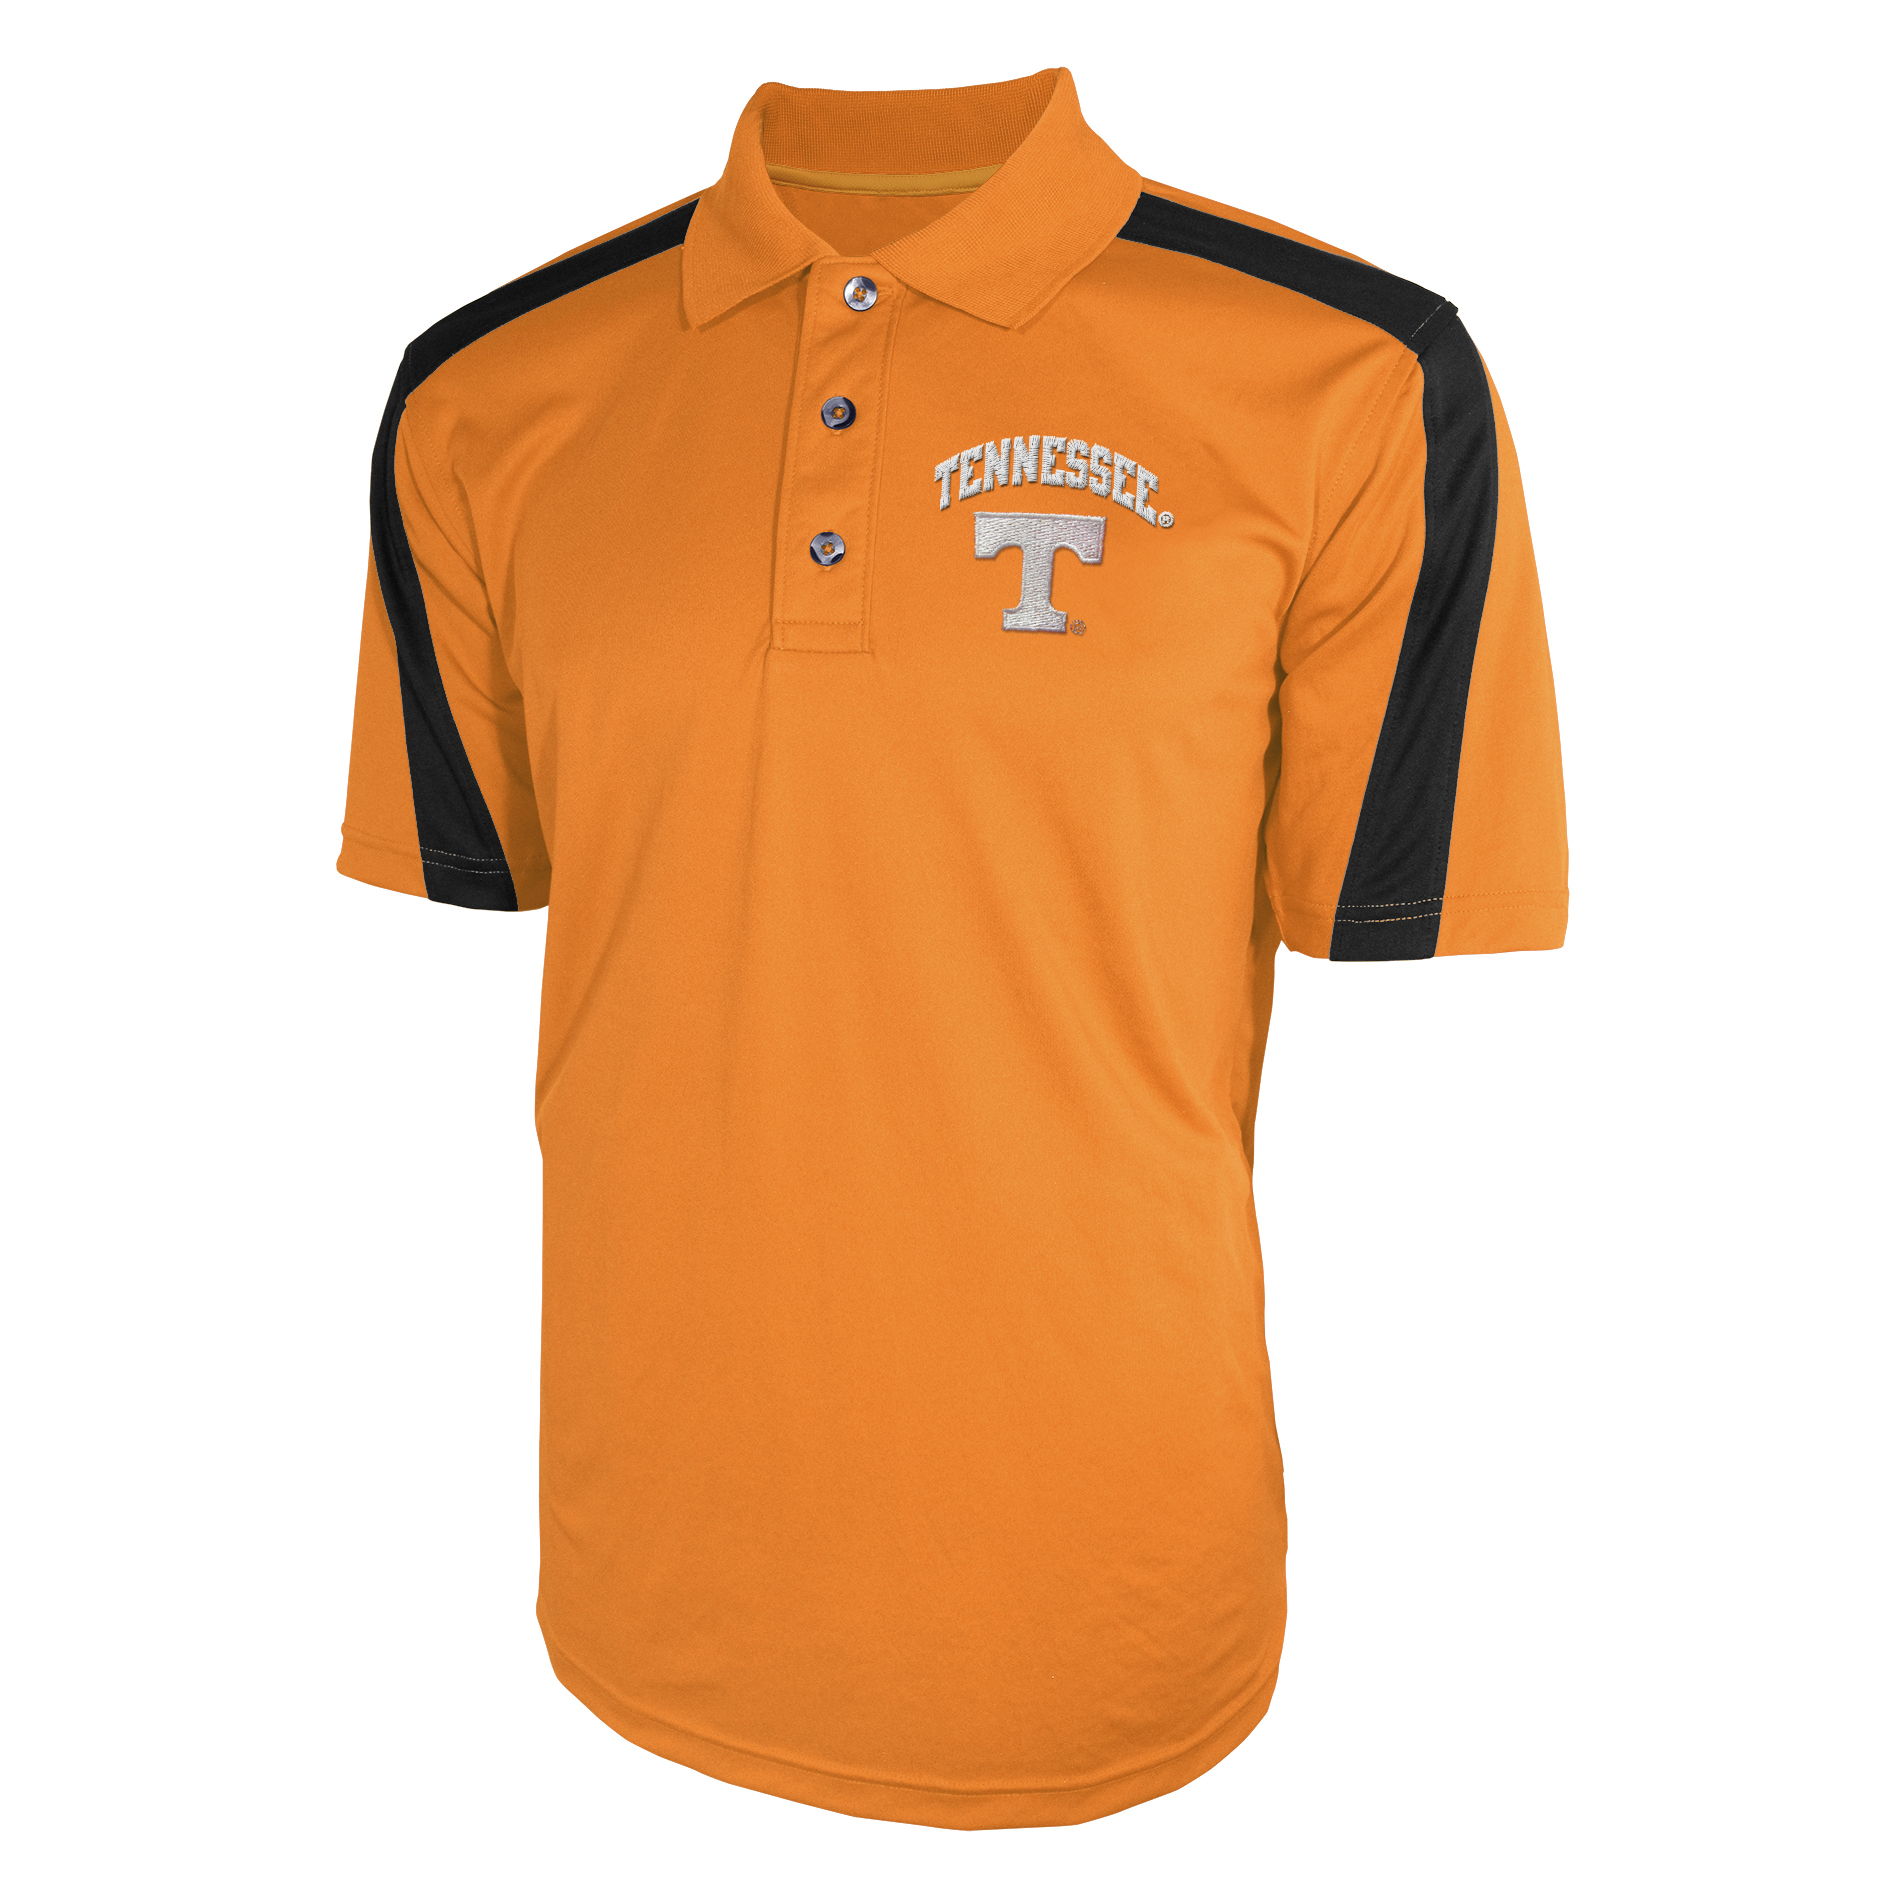 NCAA Men's Big & Tall Polo Shirt - University of Tennessee Volunteers